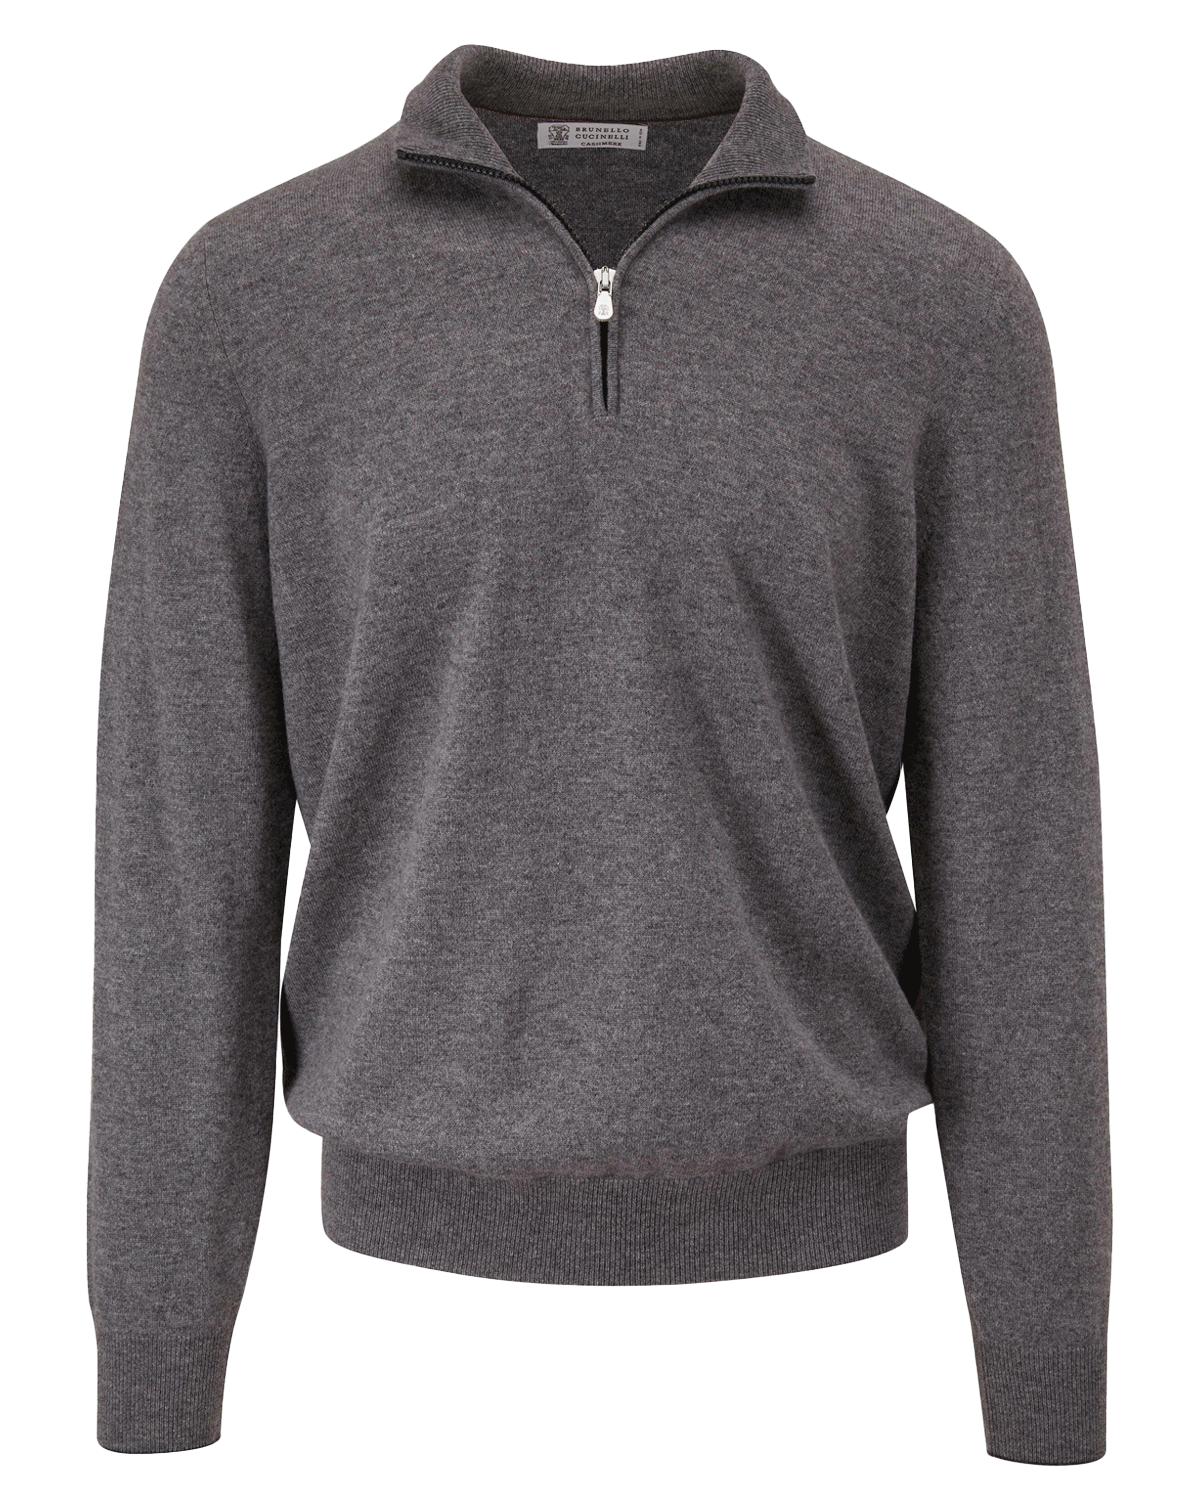 Charcoal Cashmere Half-Zip Sweater